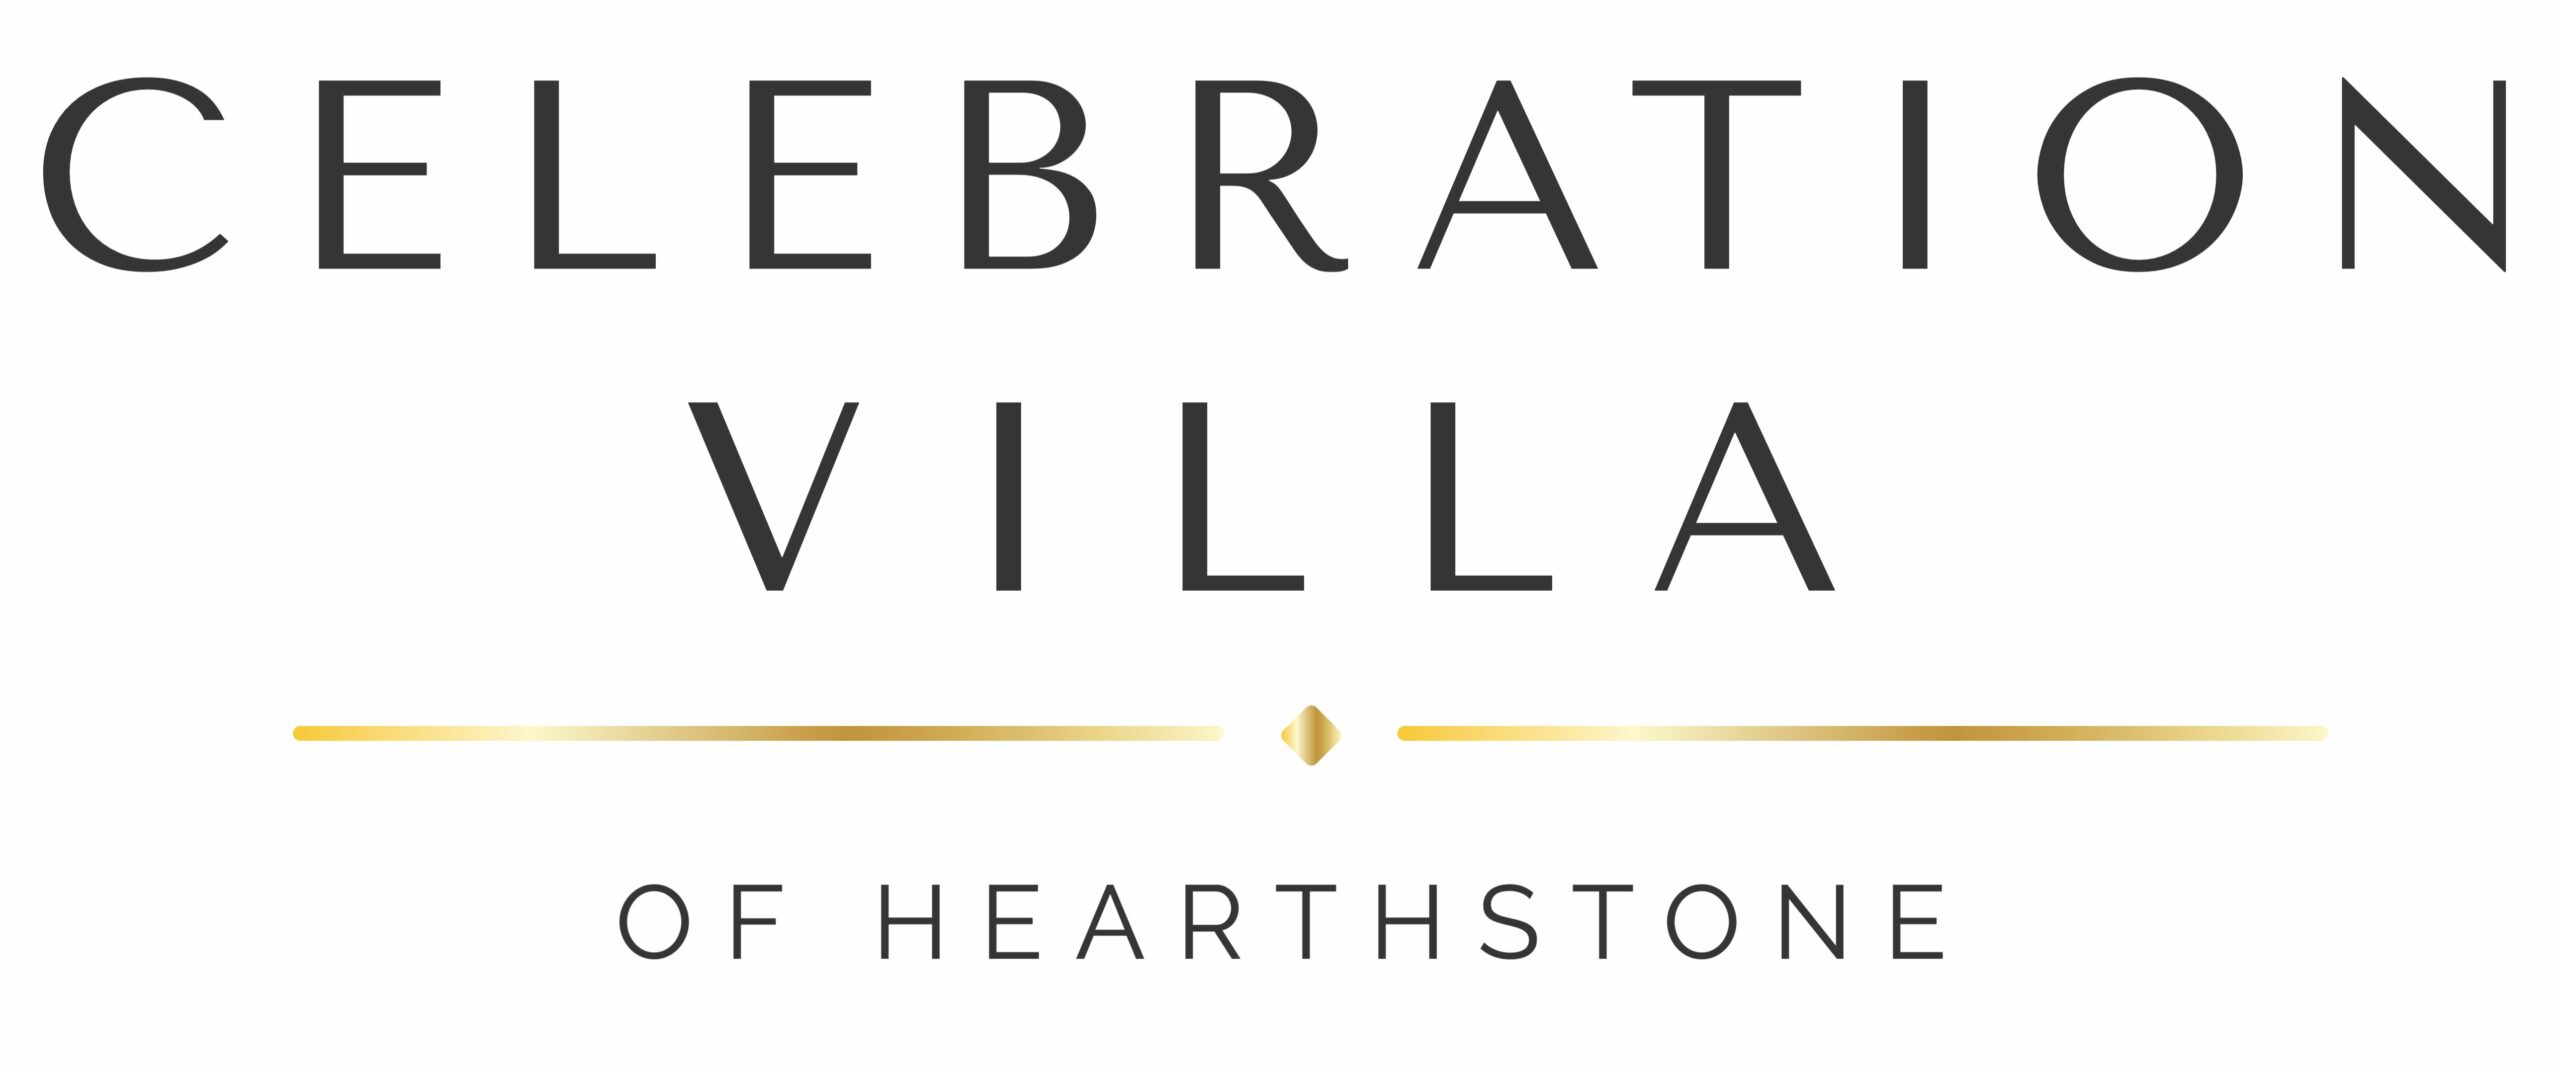 Celebration Villa of Hearthstone East 